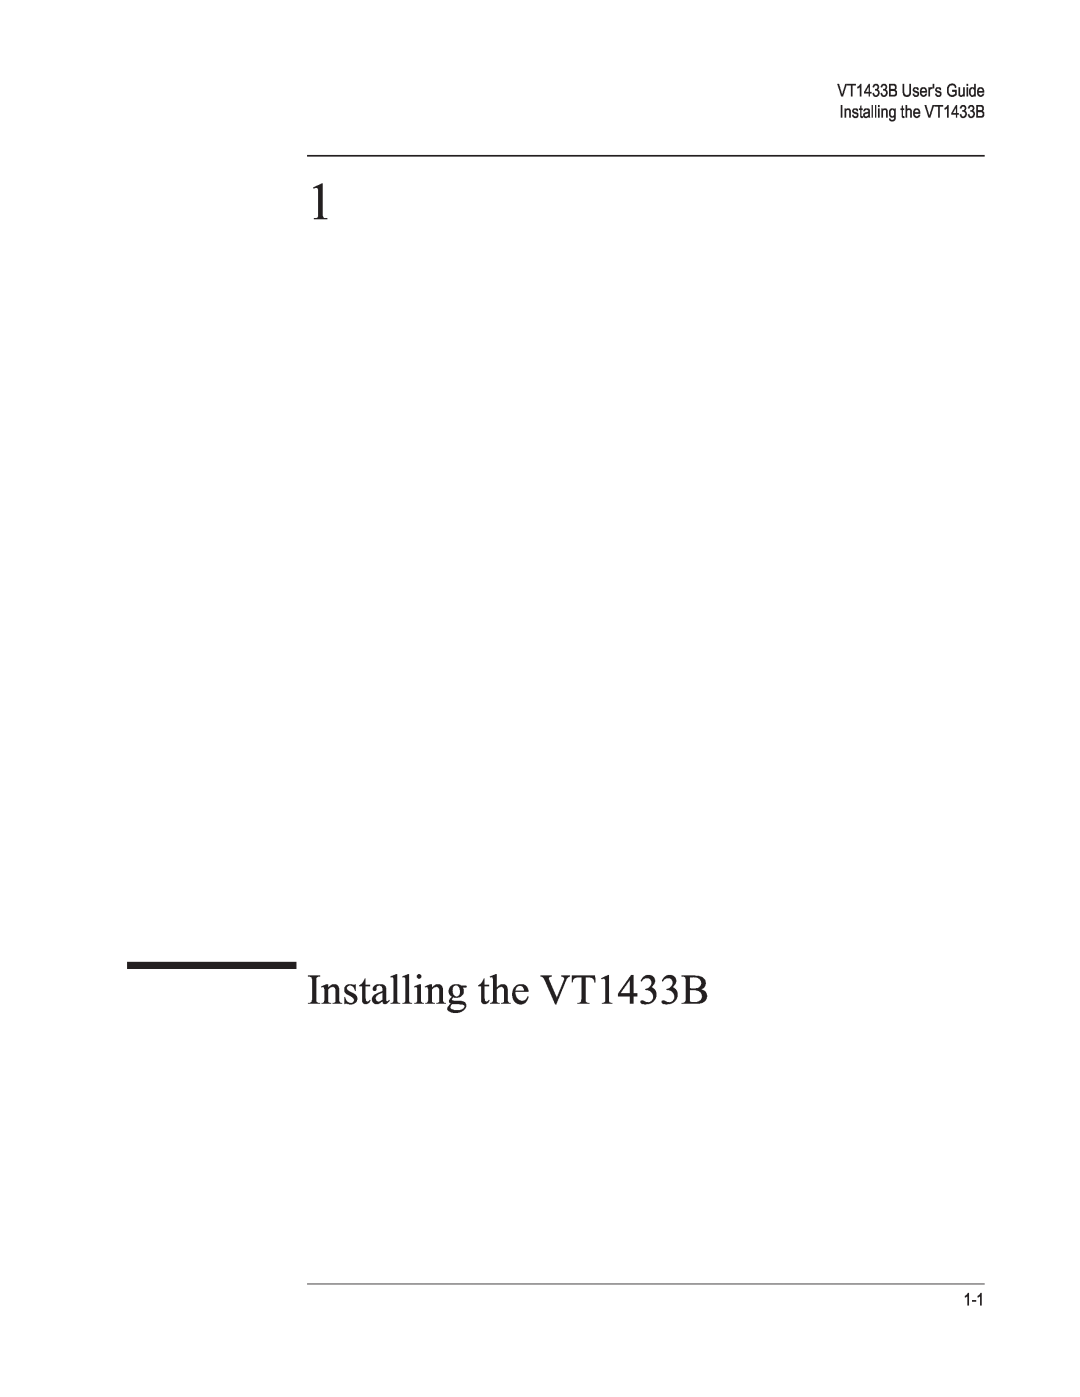 VXI manual VT1433B Users Guide Installing the VT1433B 